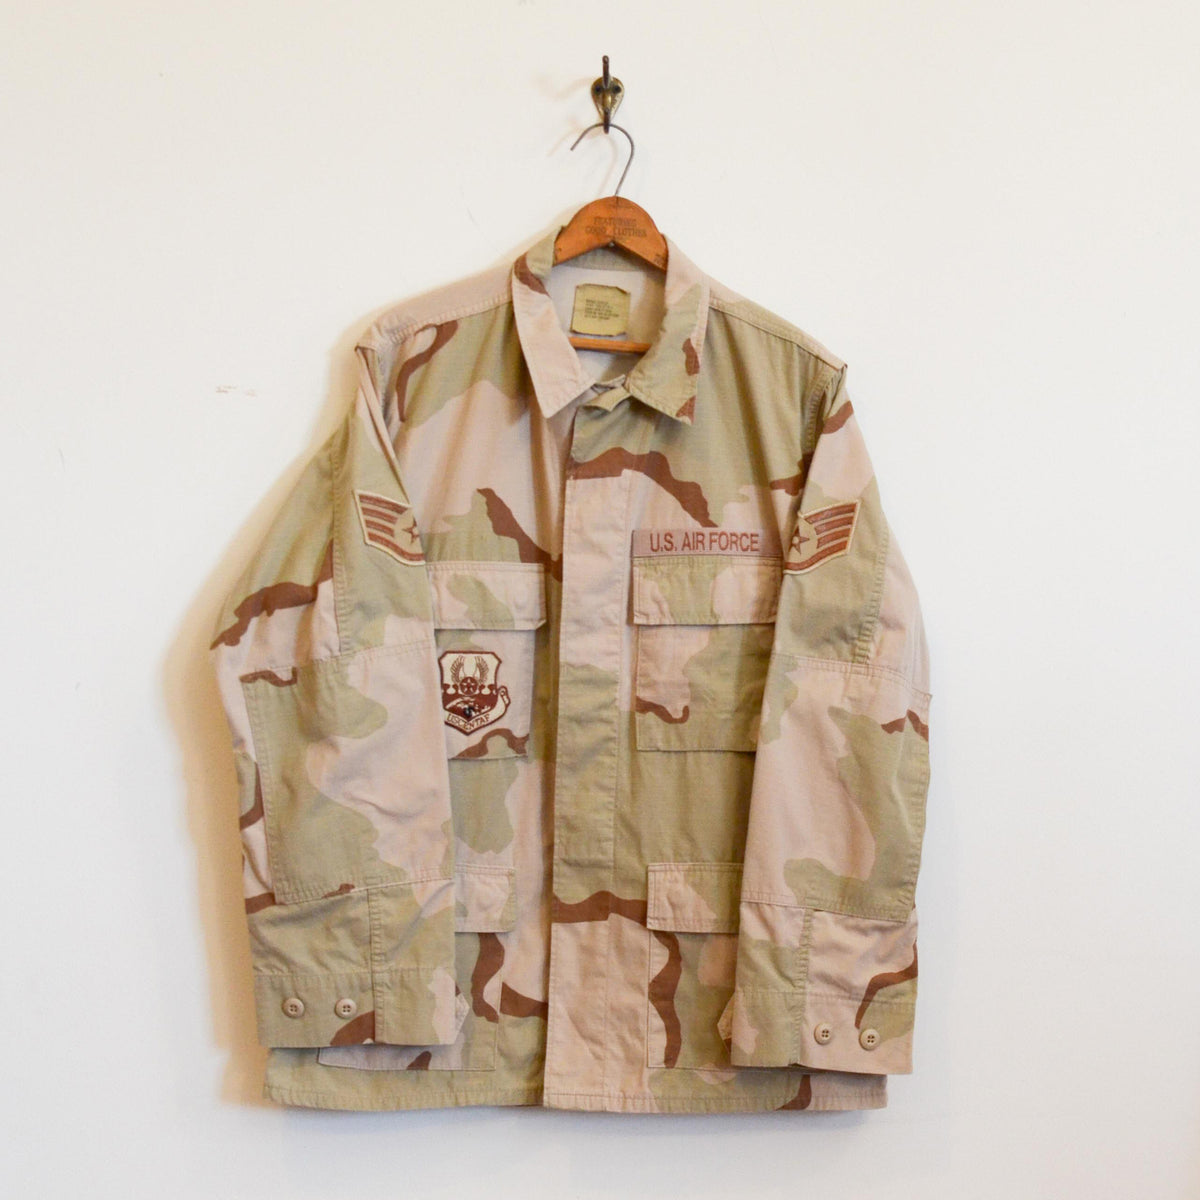 US Army M-43 Camouflage Jacket